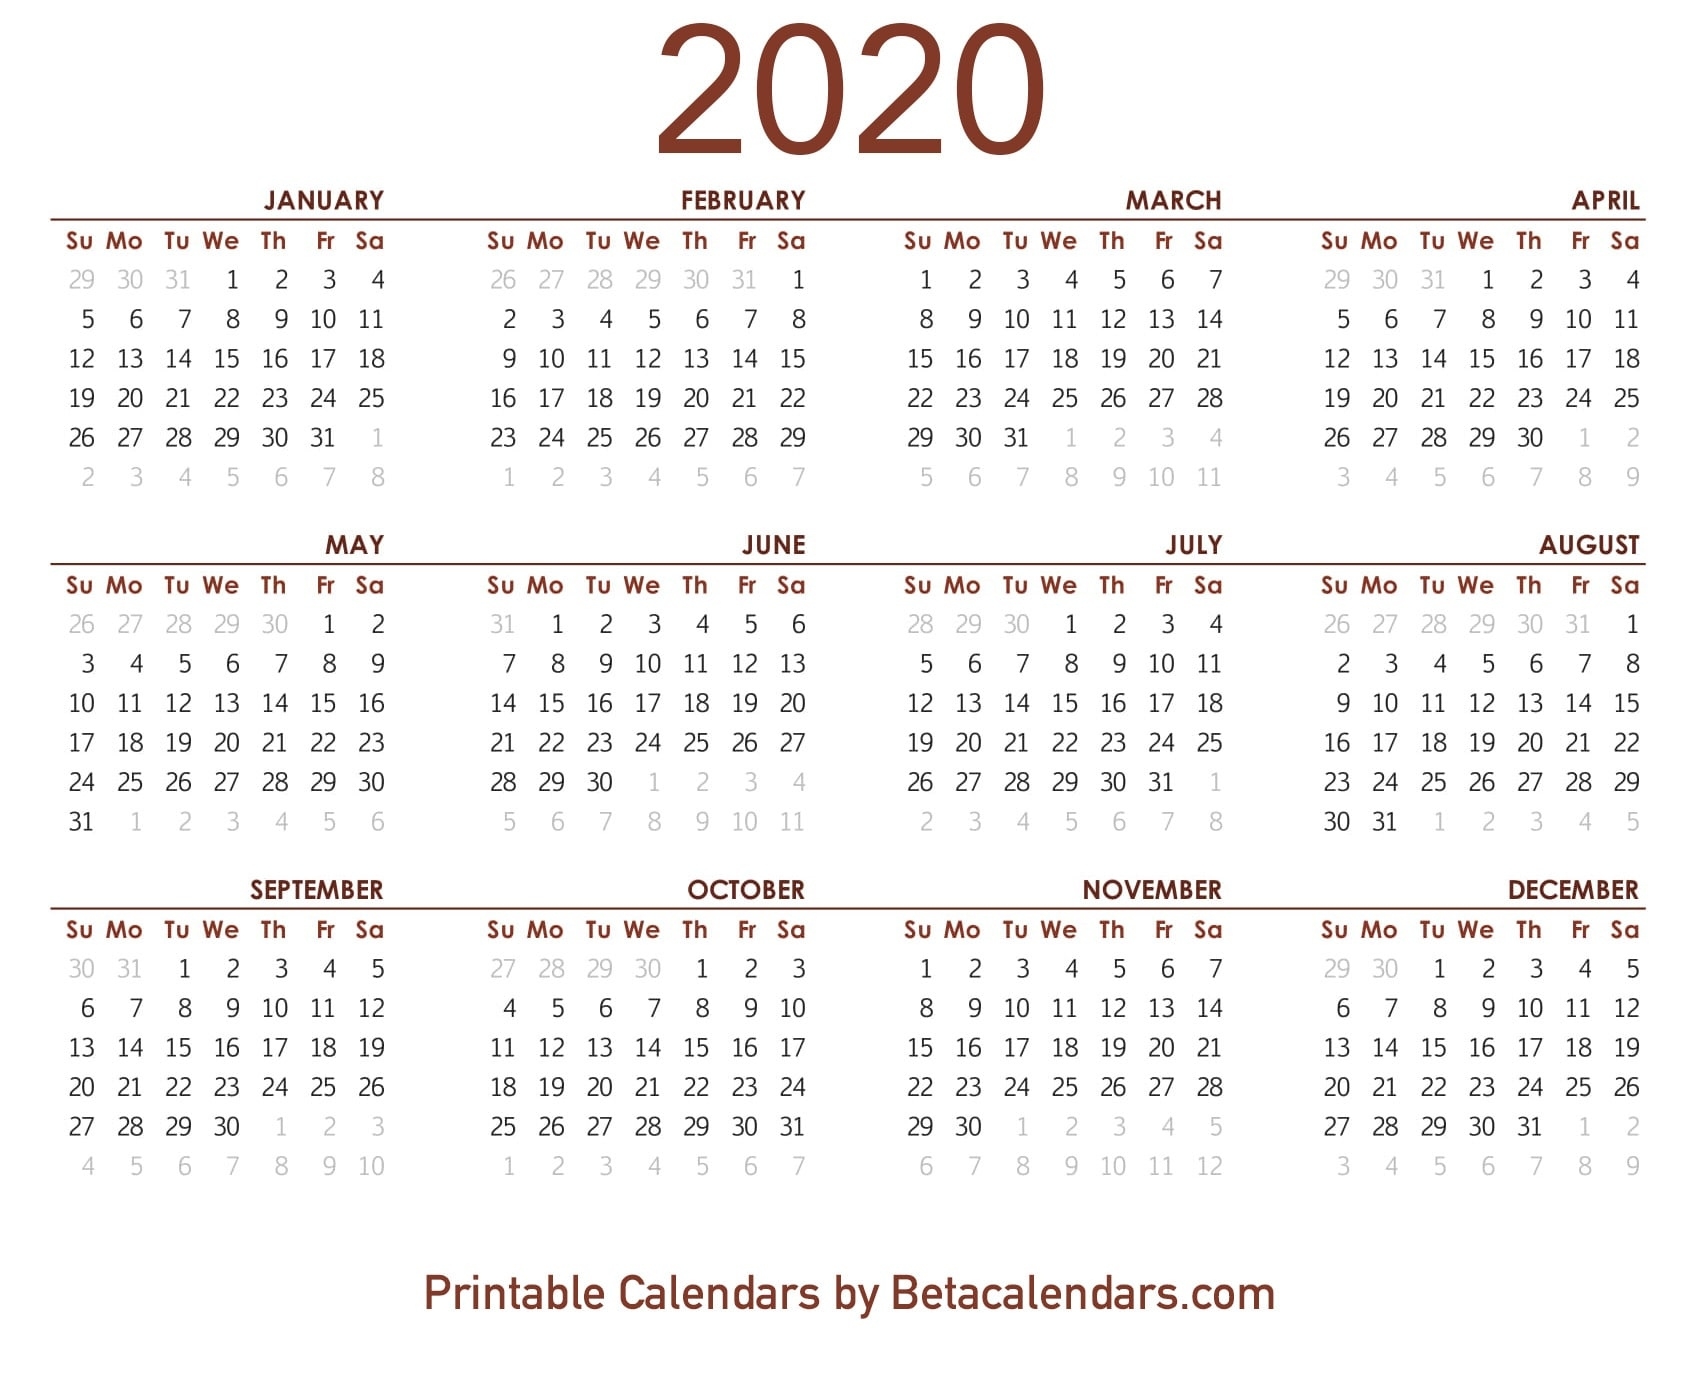 2020 Calendar - Free Printable Yearly Calendar 2020 Perky May 1 2020 Calendar